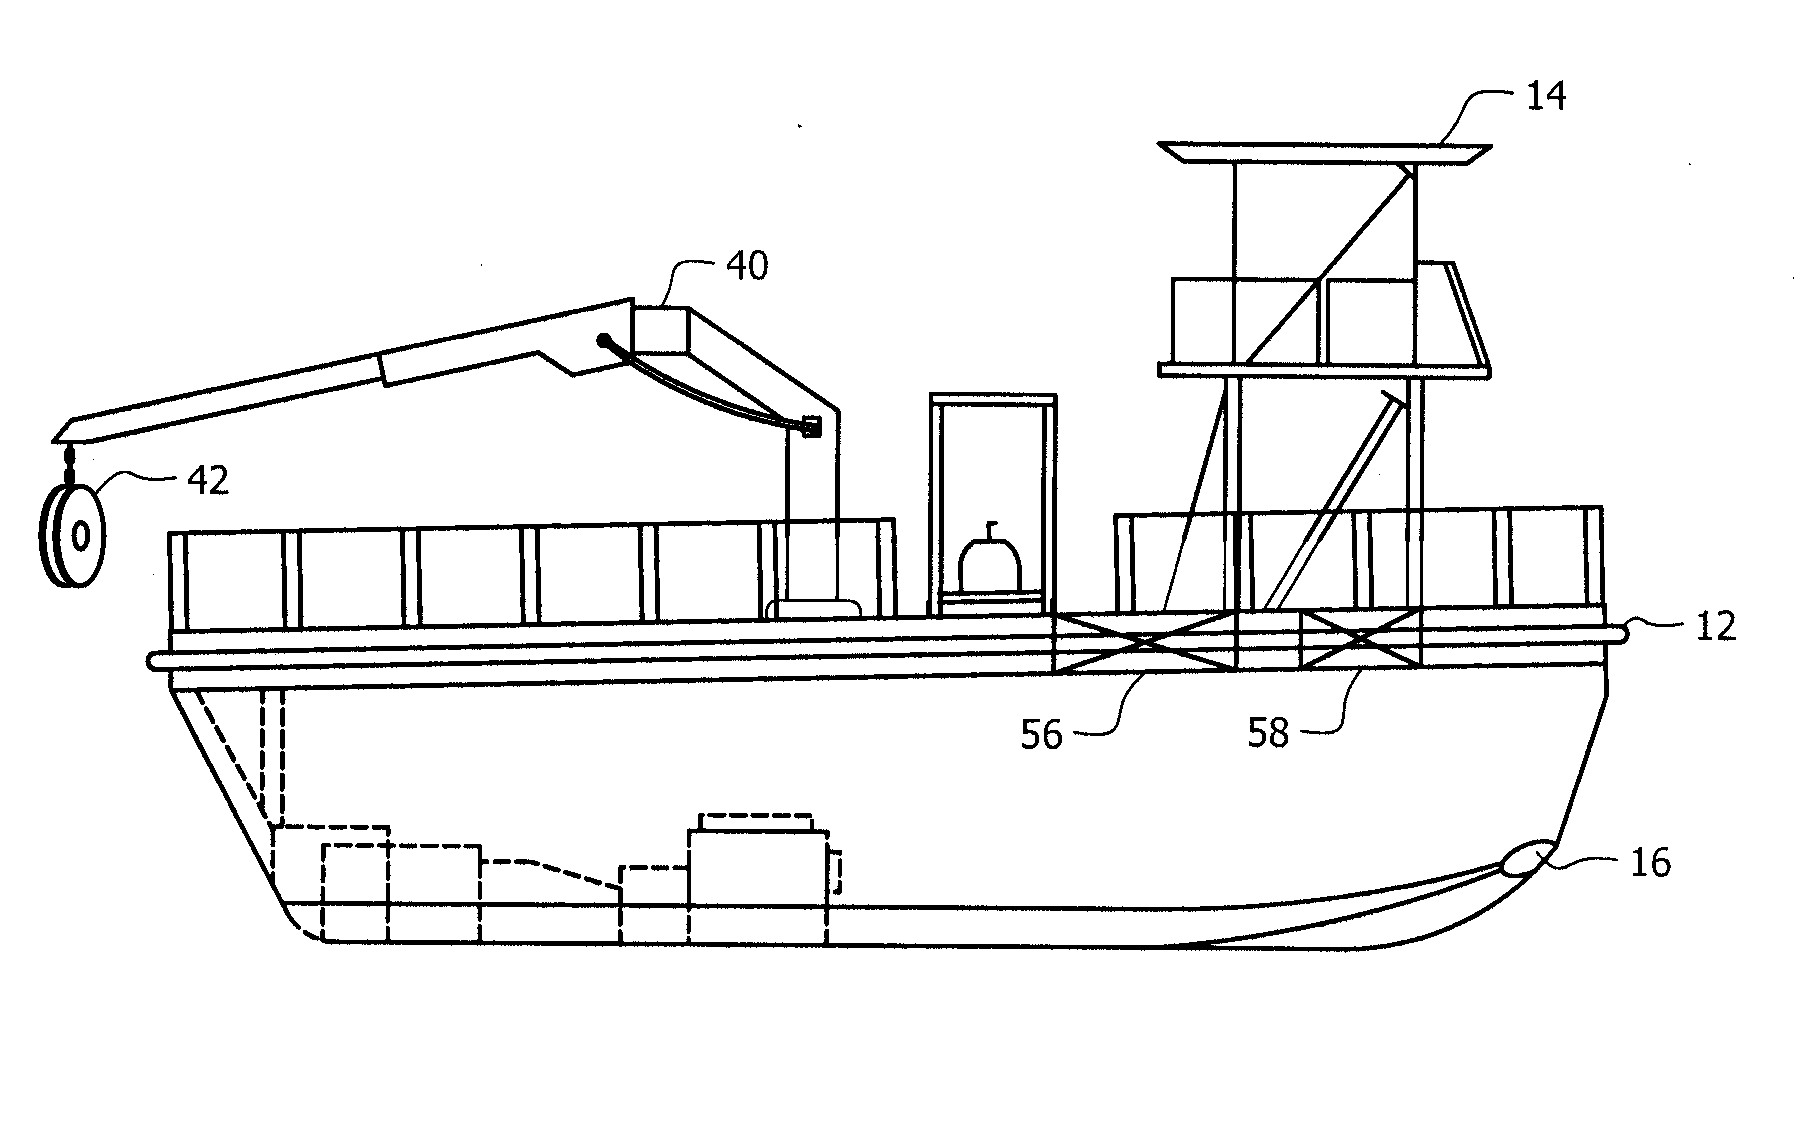 Multihull fishing vessel and method of use